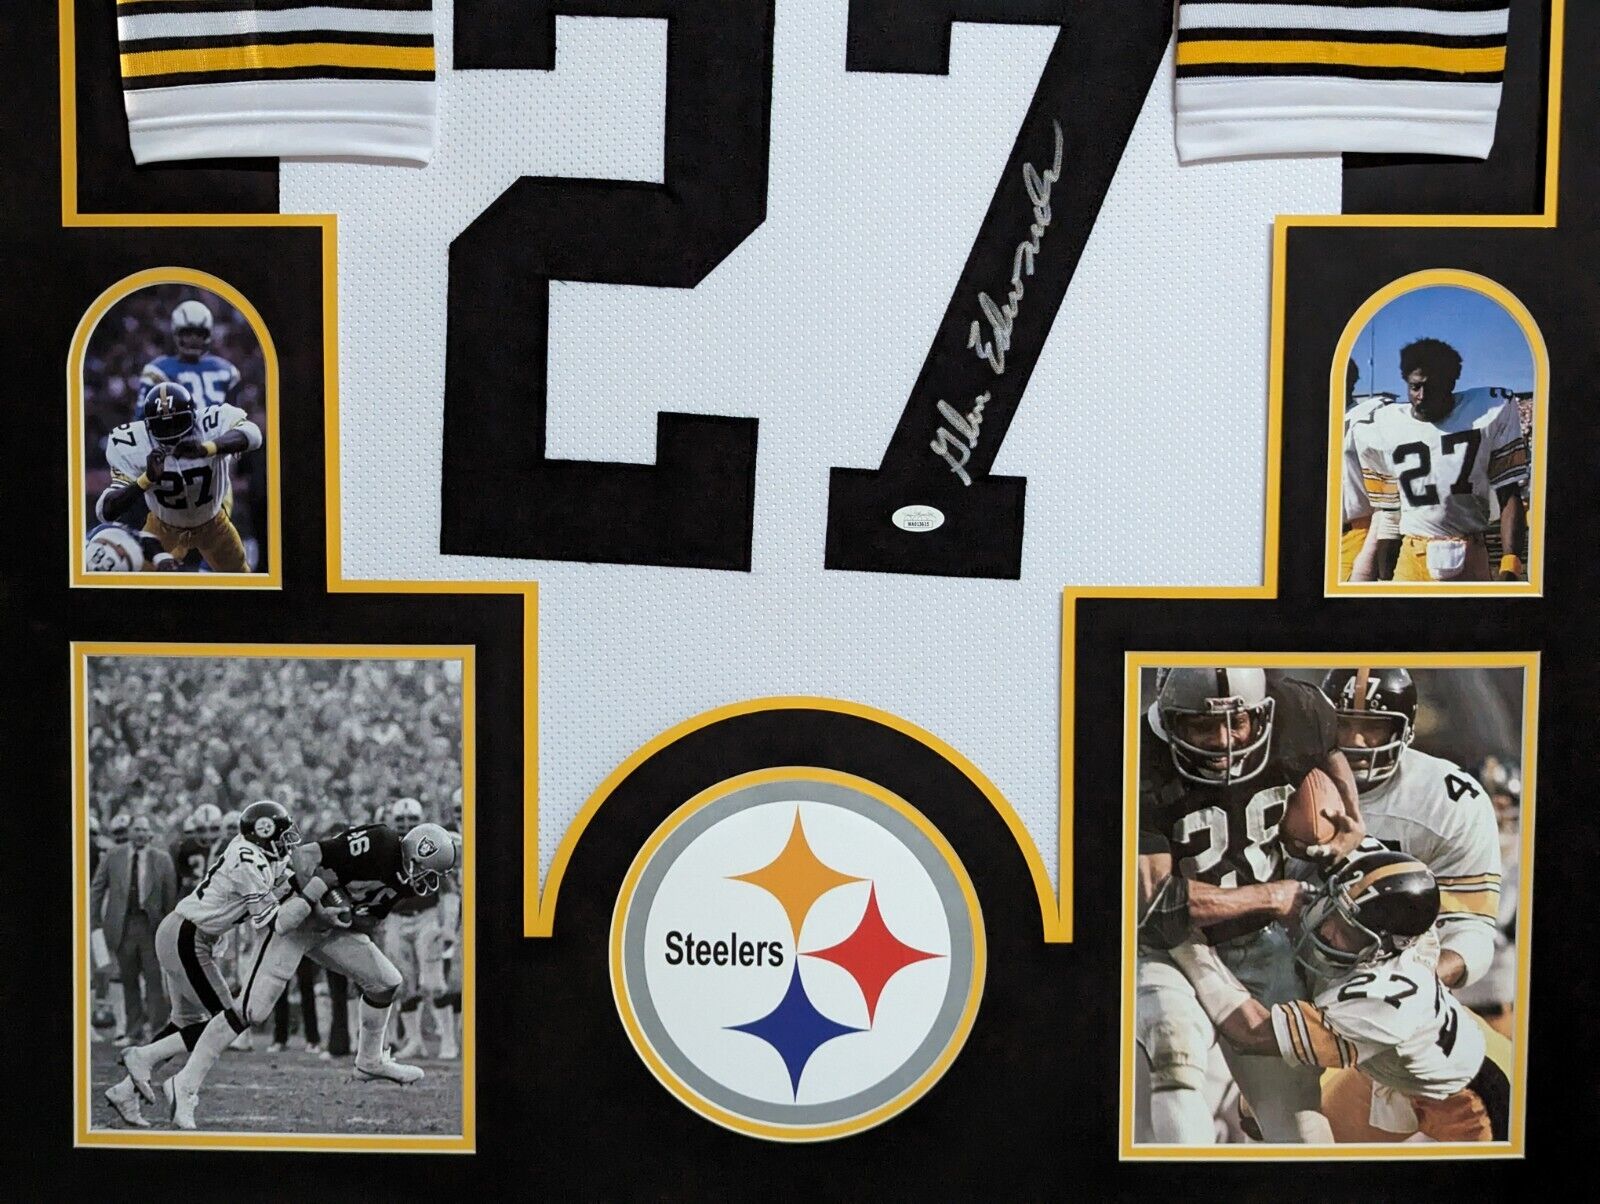 MVP Authentics Framed Pittsburgh Steelers Glen Edwards Autographed Jersey Jsa Coa 337.50 sports jersey framing , jersey framing